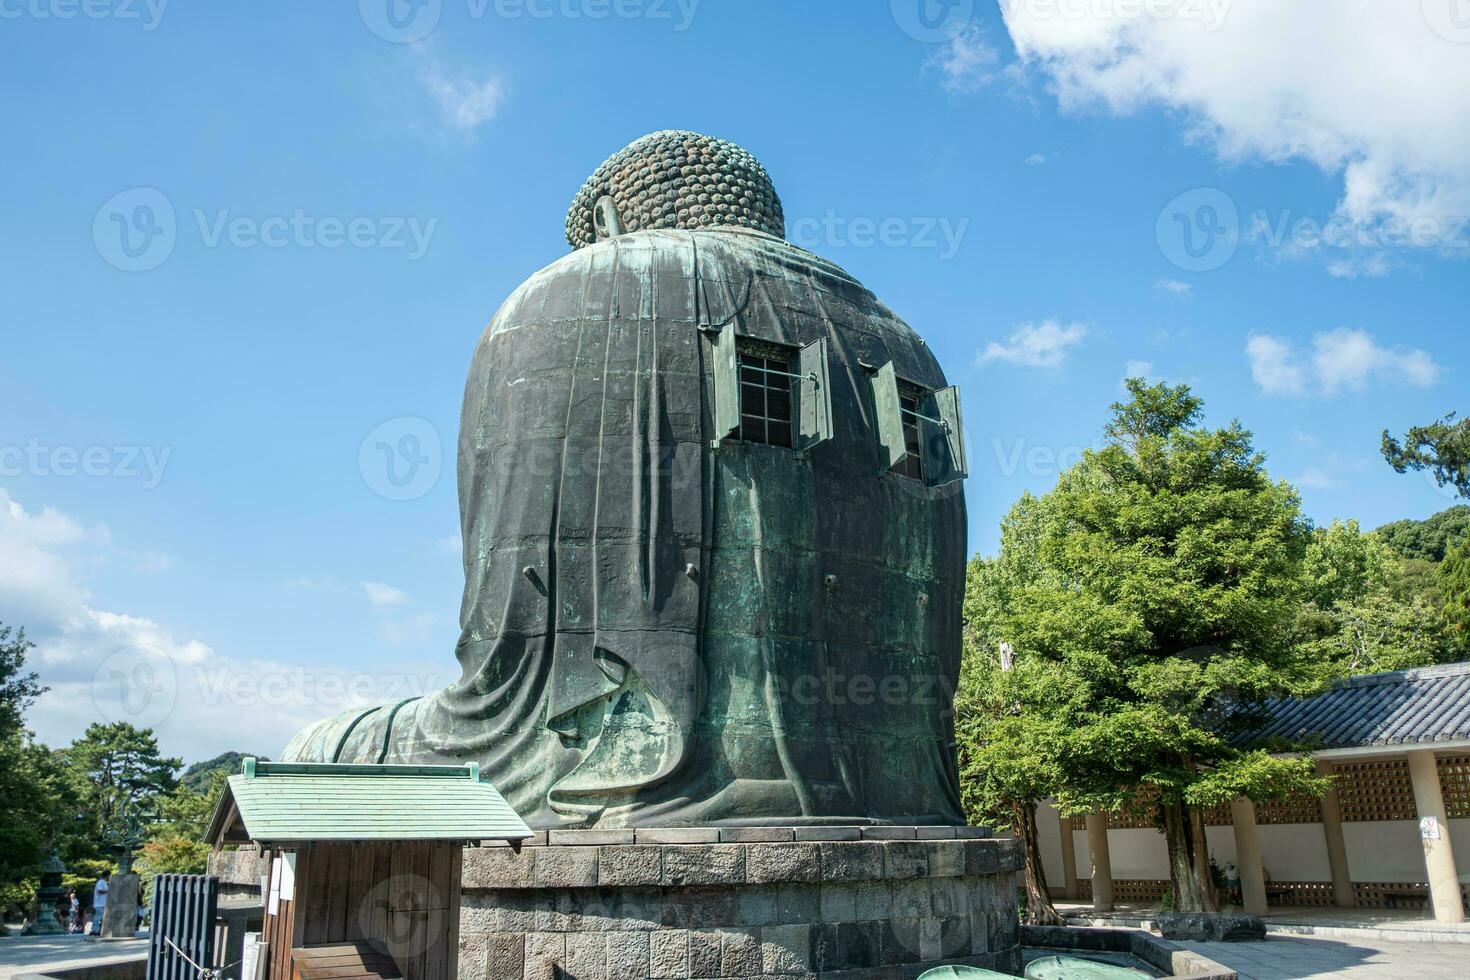 The great blue buddha statue Kamakura Daibutsu at Kotoku in shrine temple in Kamakura,Kanagawa, Japan photo